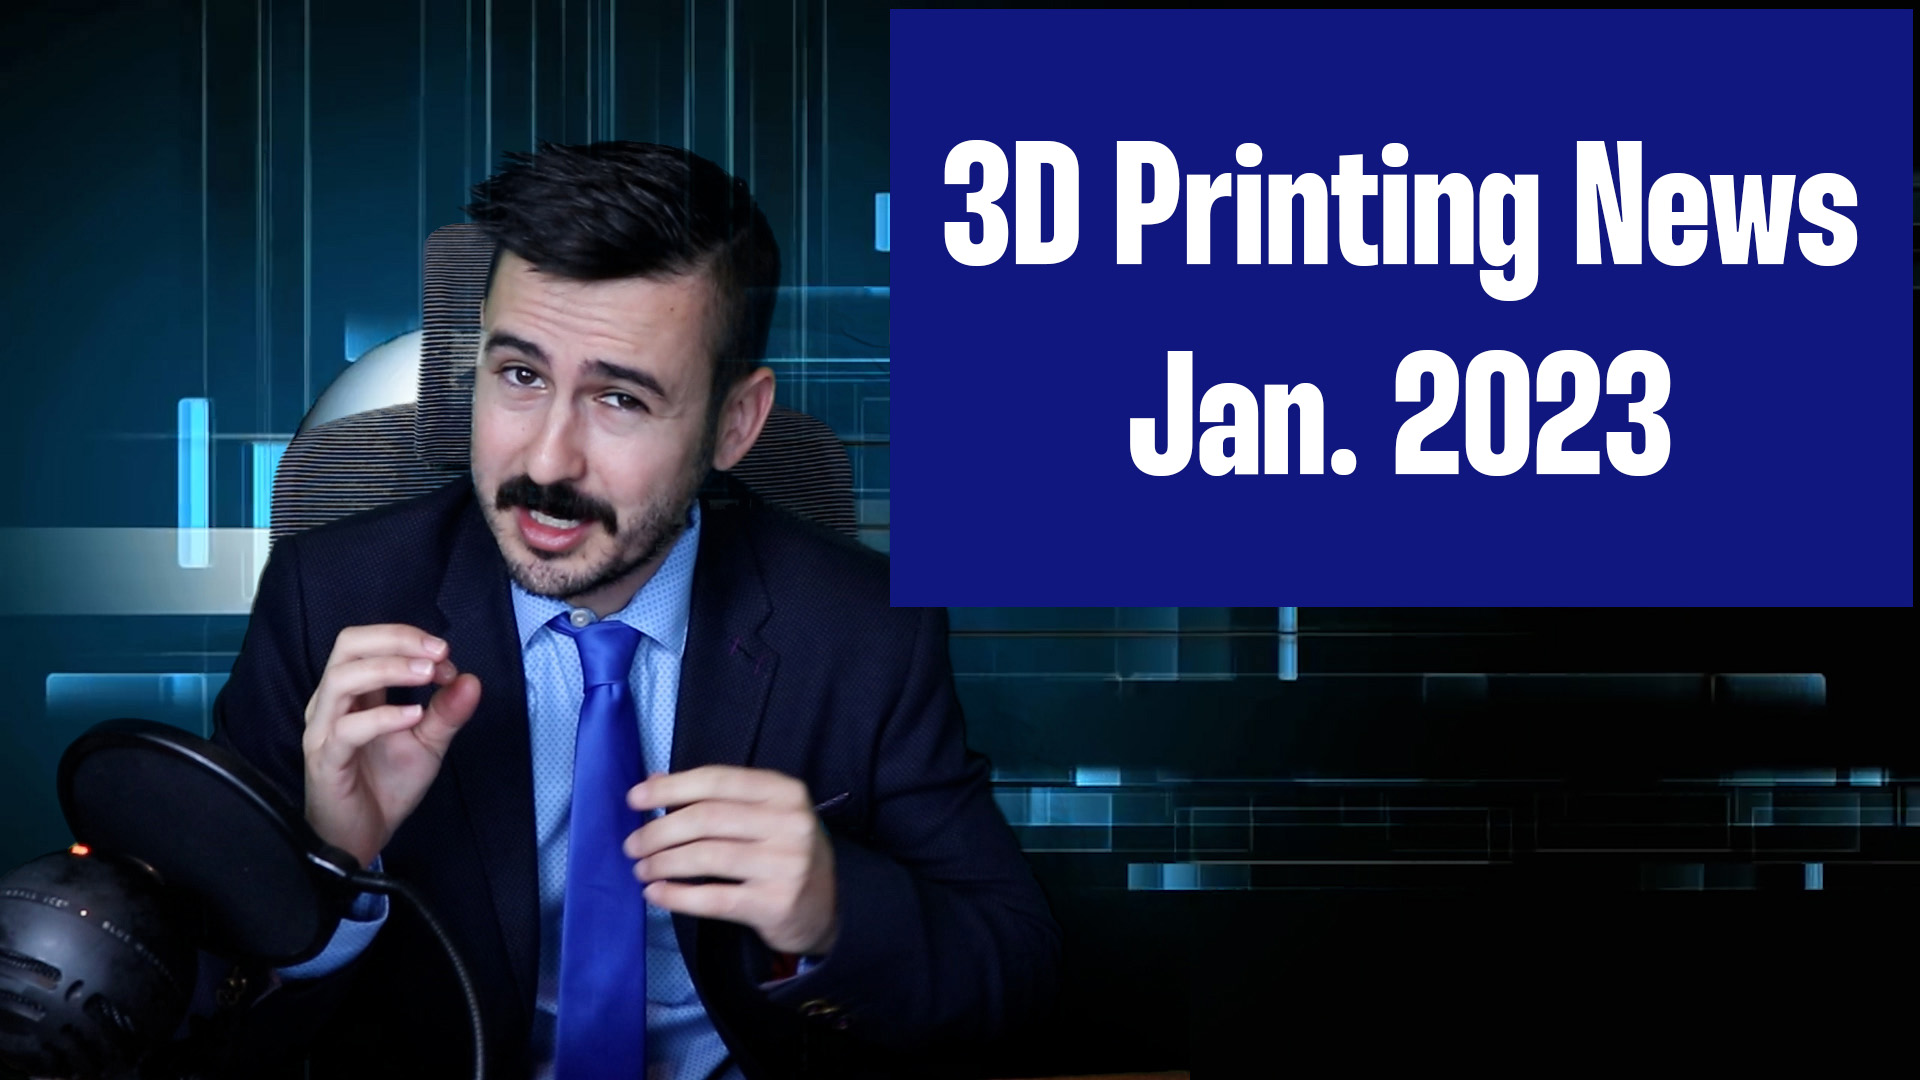 3D Printing News